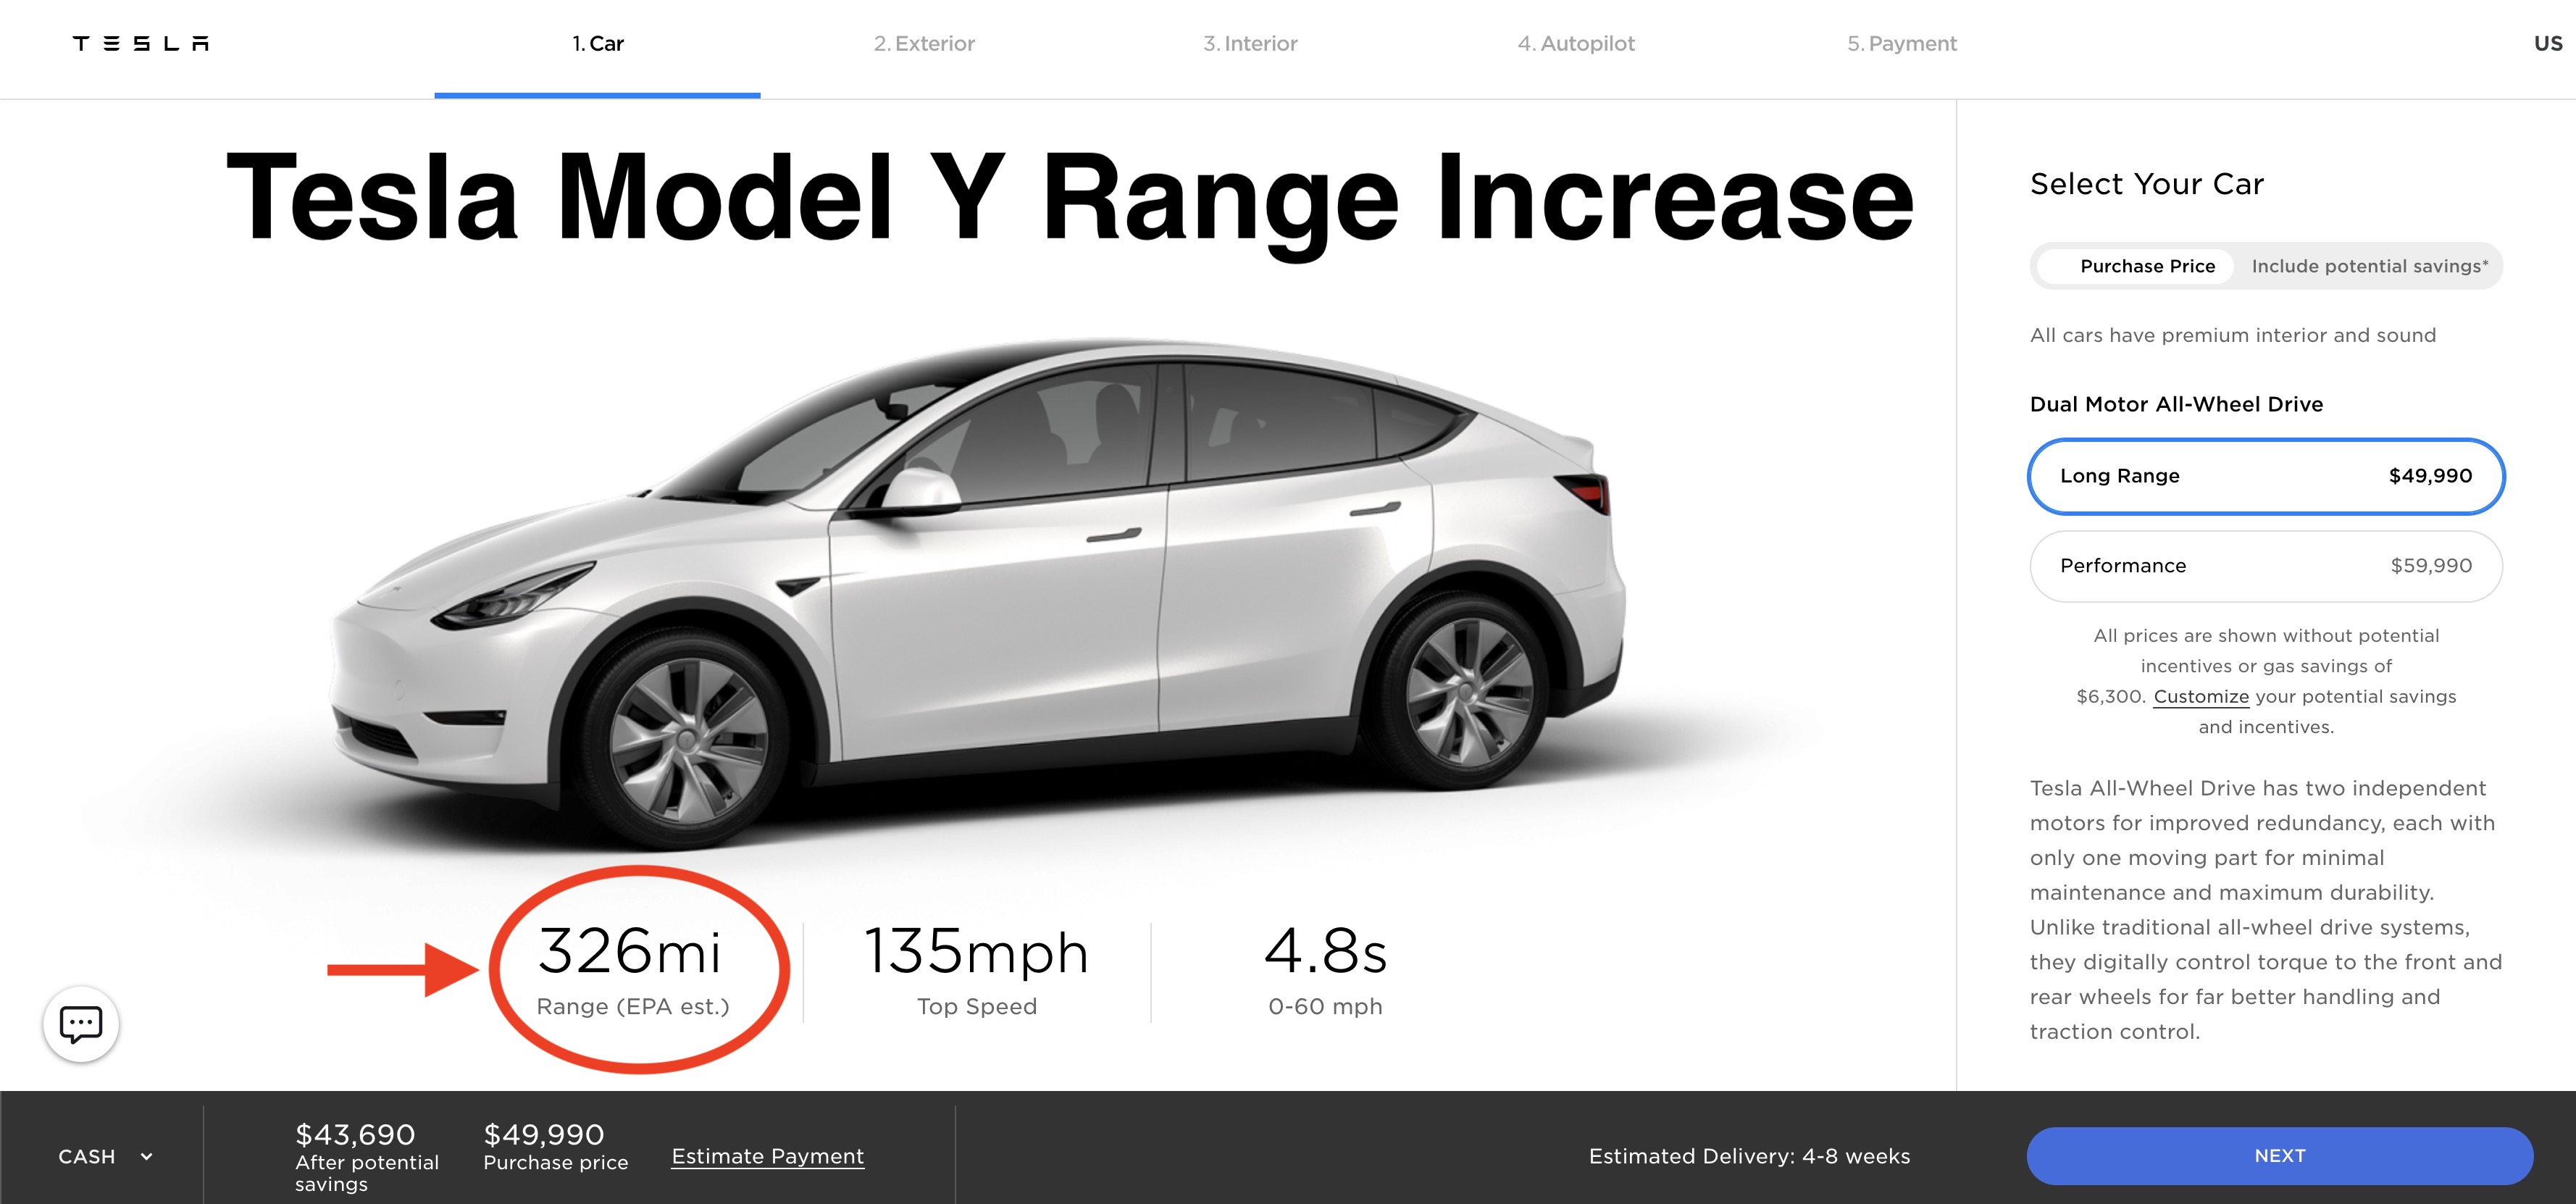 Tesla boosts Model Y range - Electrek